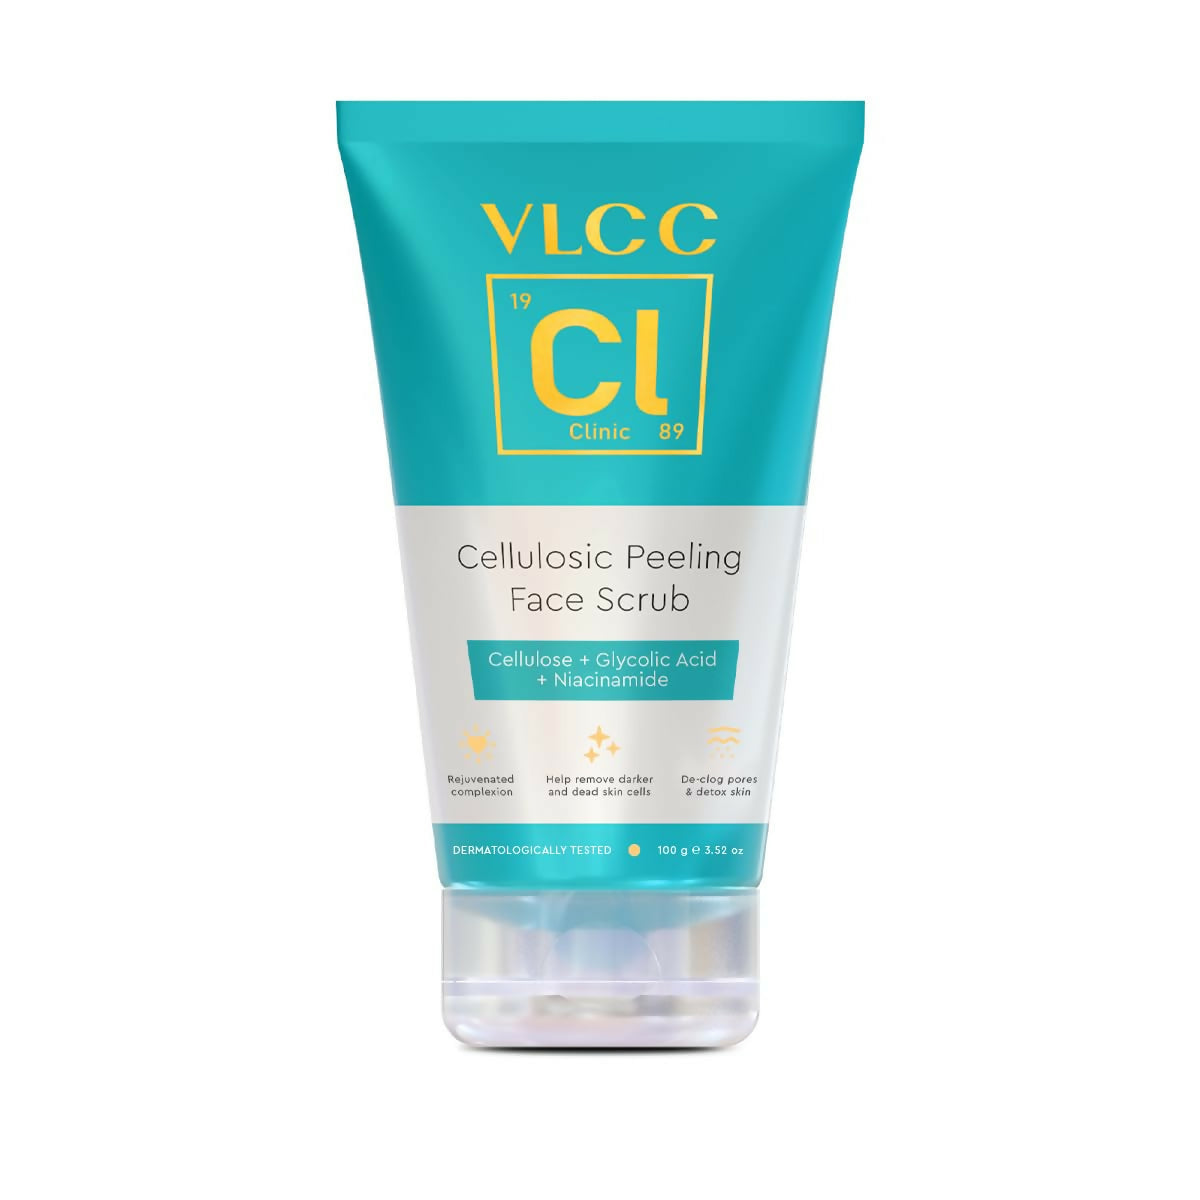 VLCC Clinic Cellulosic Peeling Face Scrub